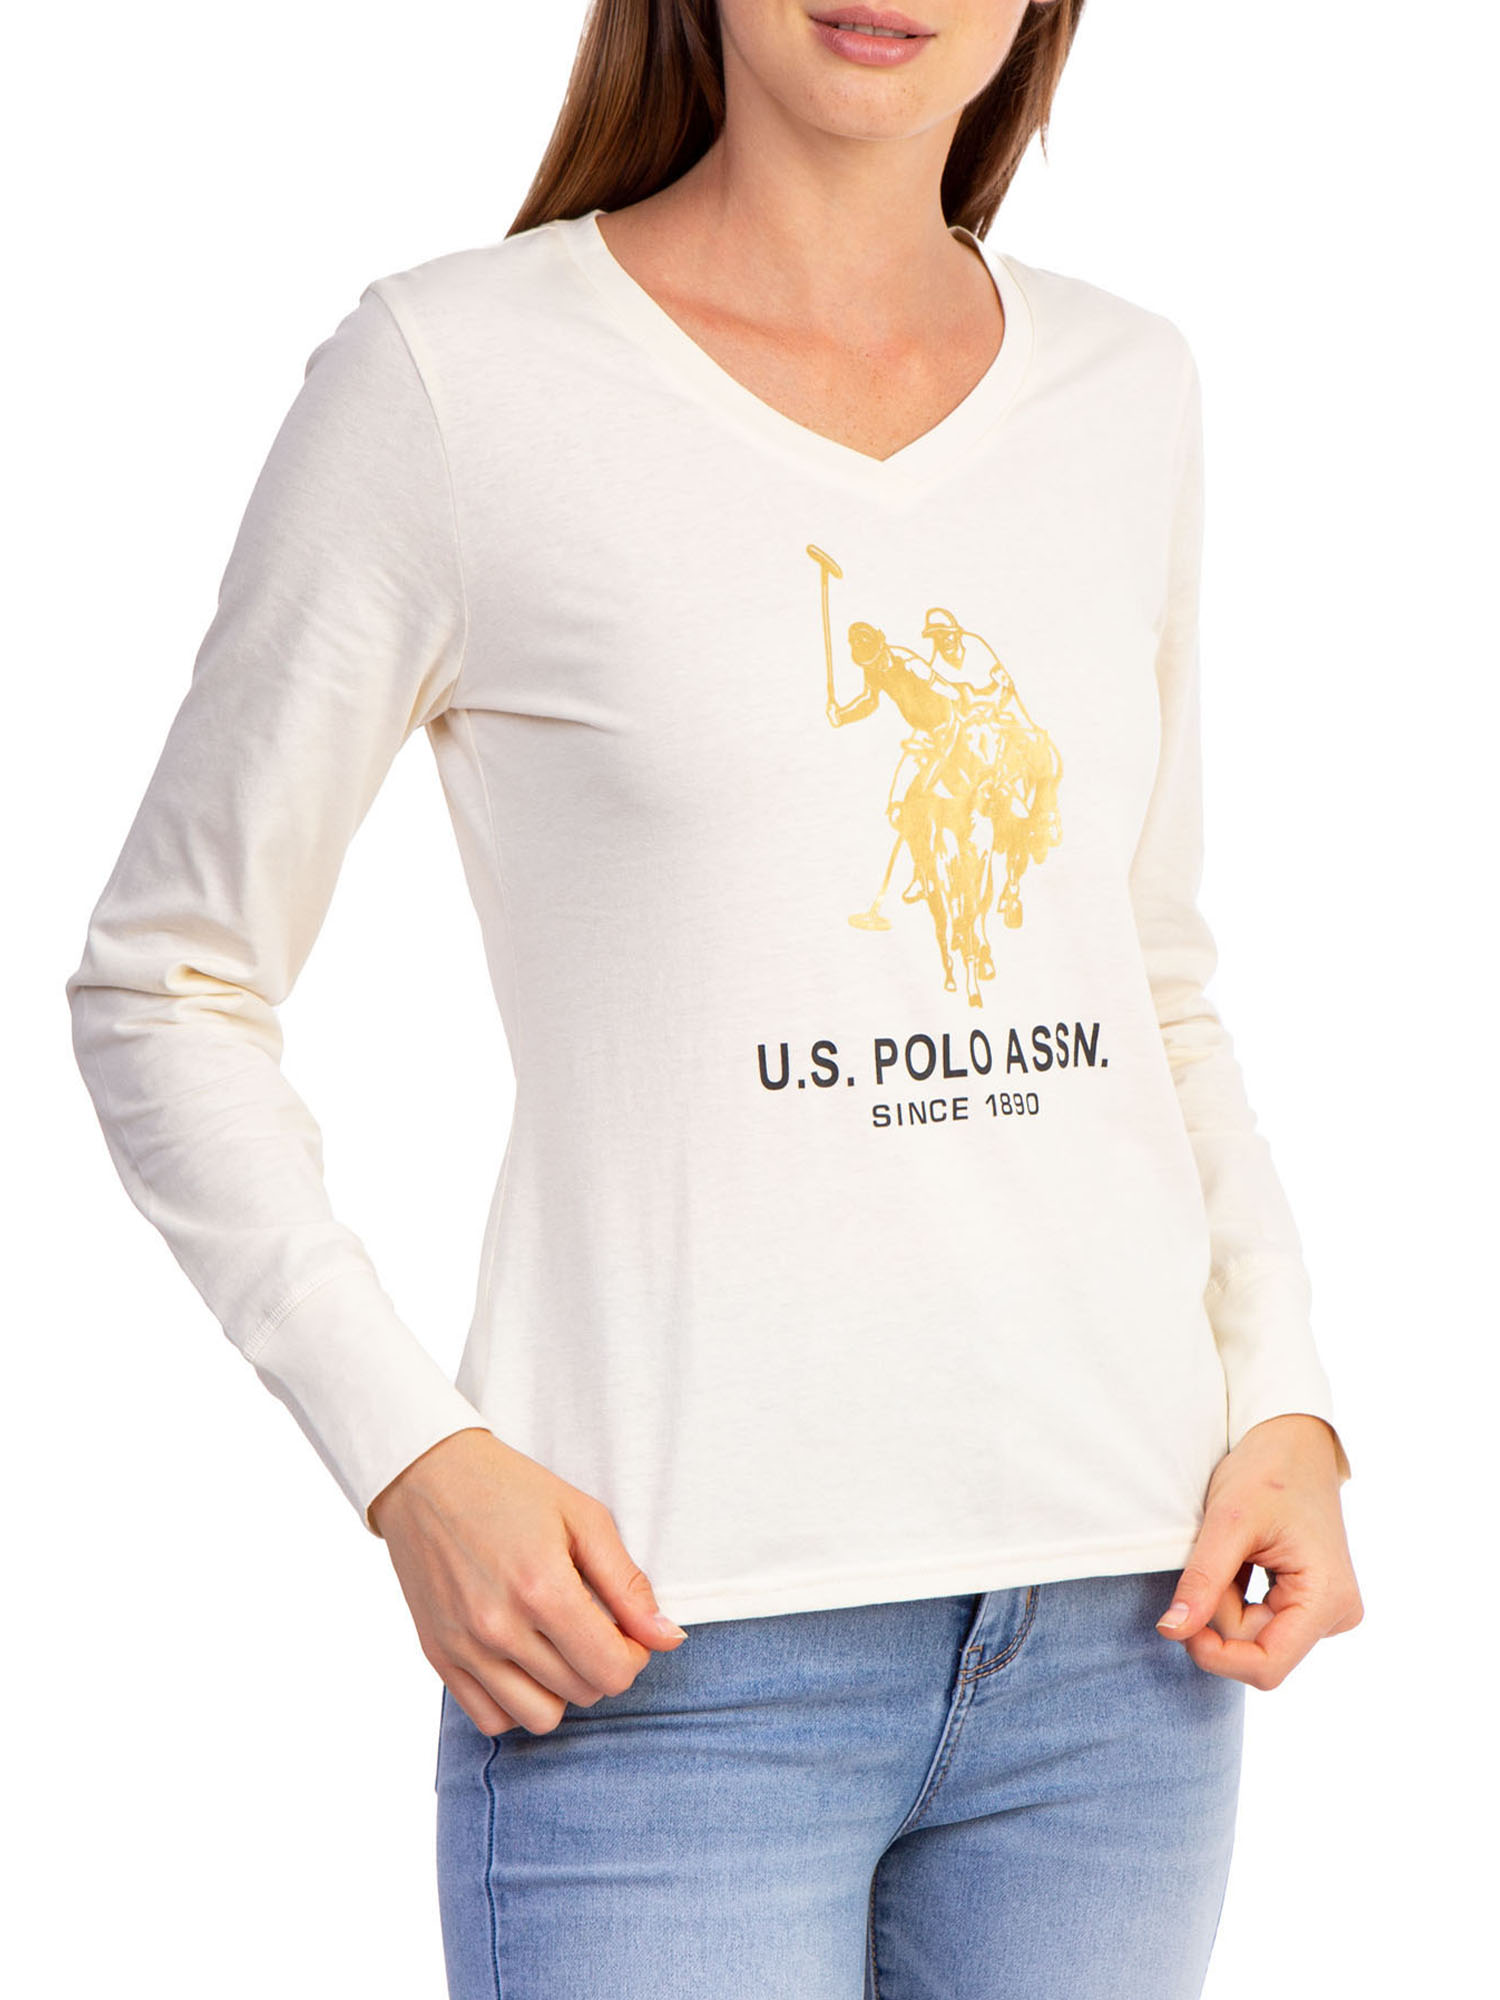 U.S. Polo Assn. Womens' Long Sleeve Graphic Jersey T Shirt - image 1 of 4